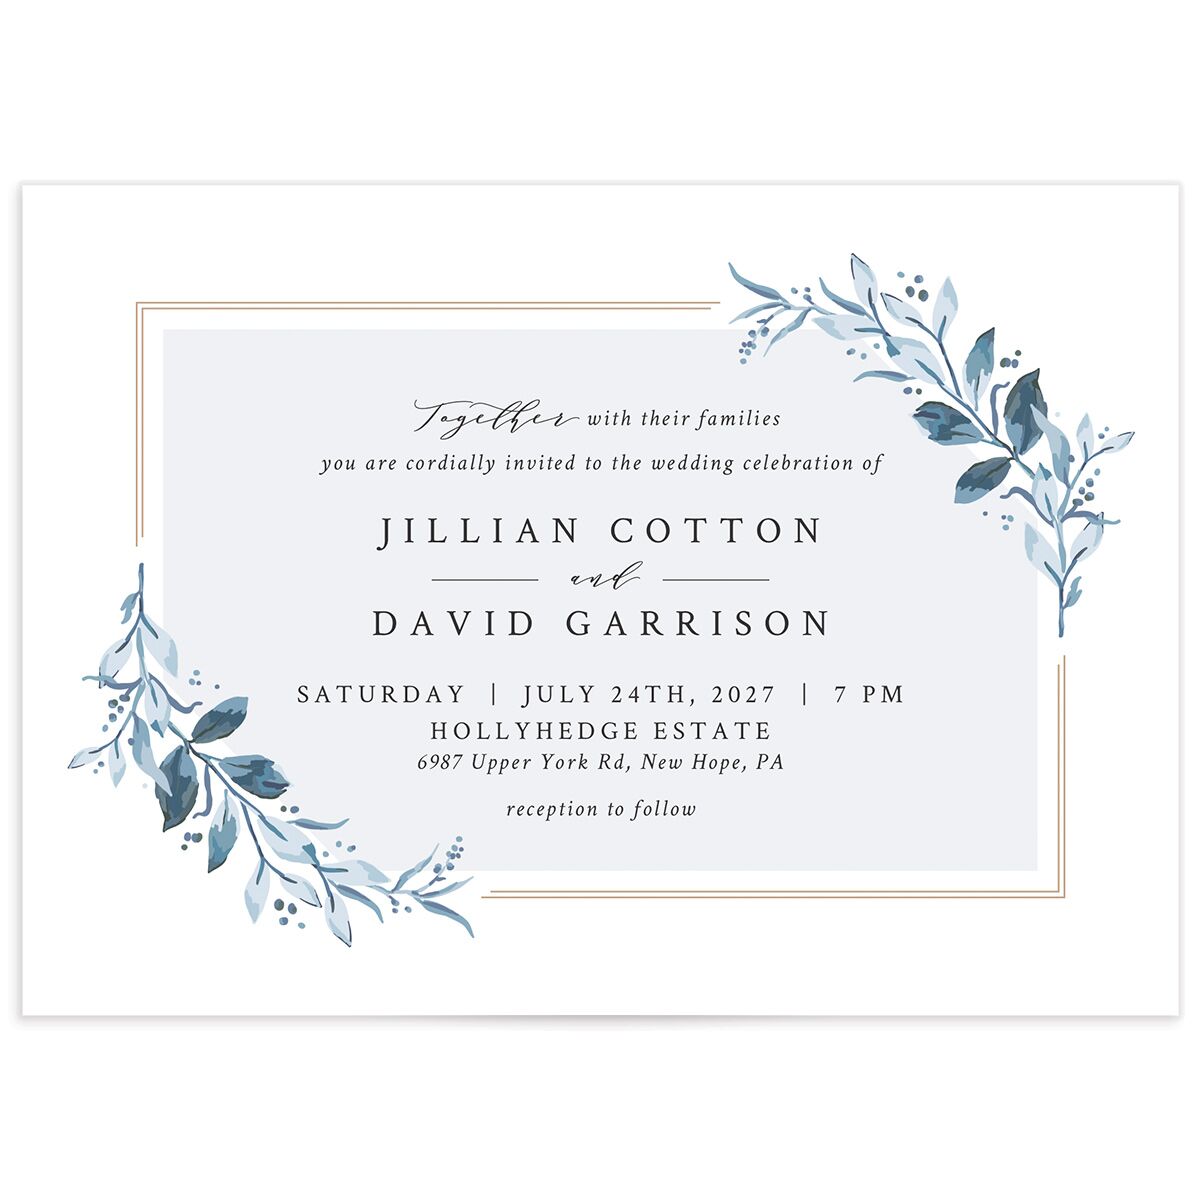  Classic Greenery Wedding Invitations